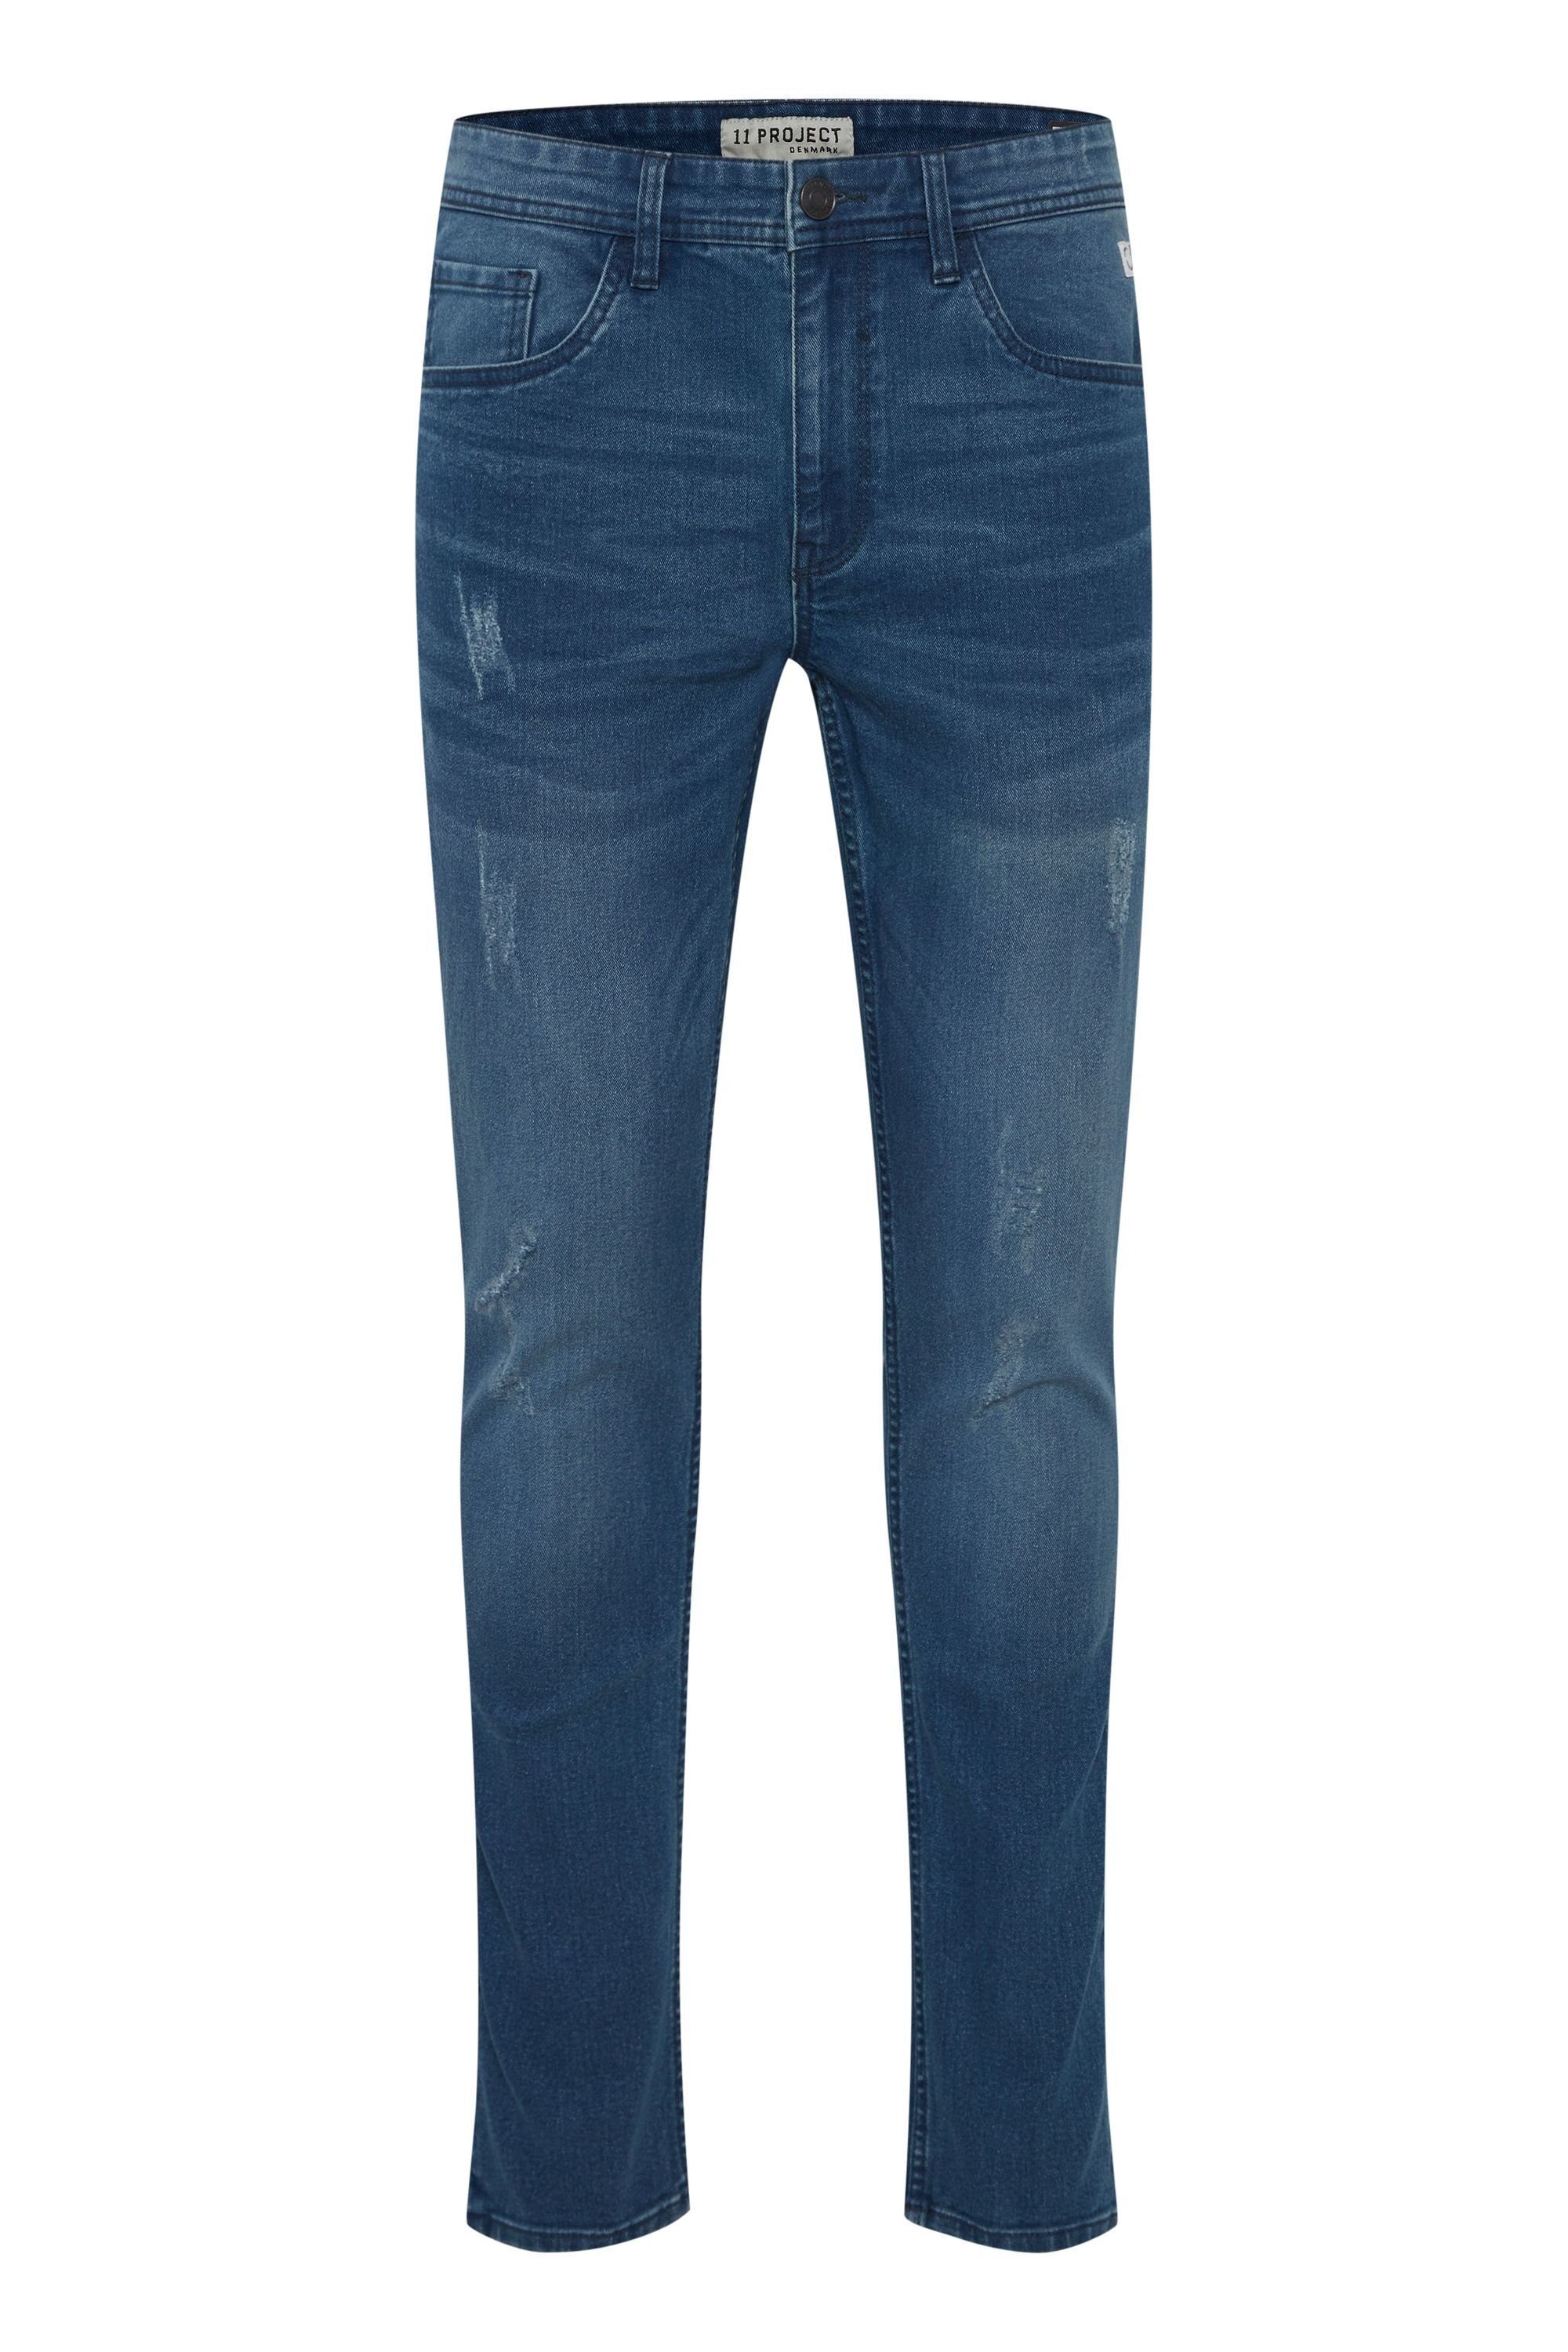 11 Project Middle Denim 11 blue PRPierino 5-Pocket-Jeans Project